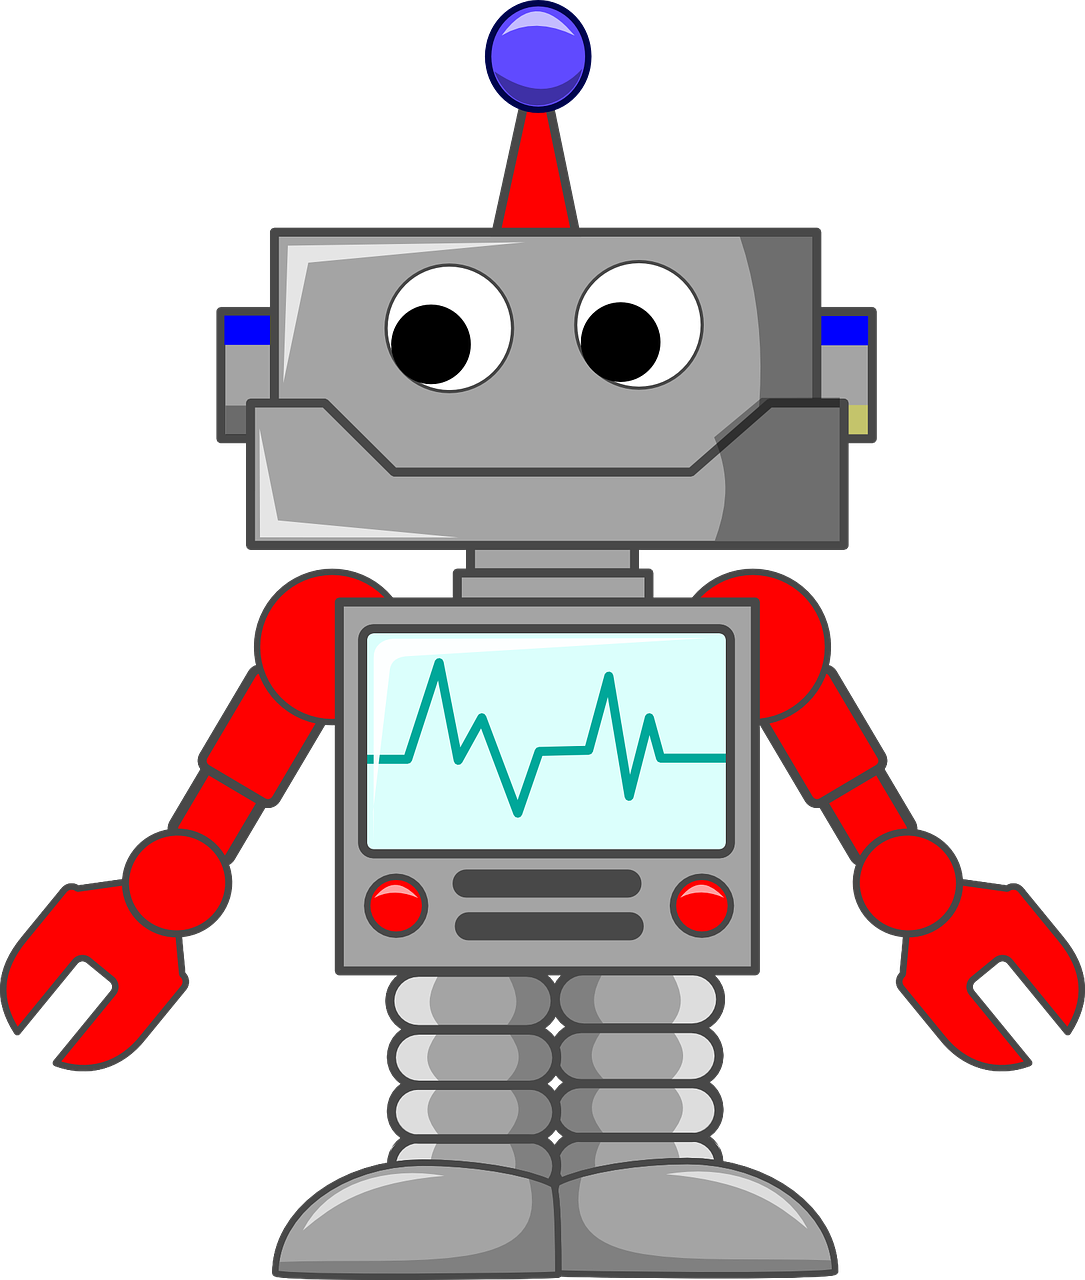 Roboter vor dem Walzertanzen, https://pixabay.com/de/vectors/roboter-maschine-technologie-312566/